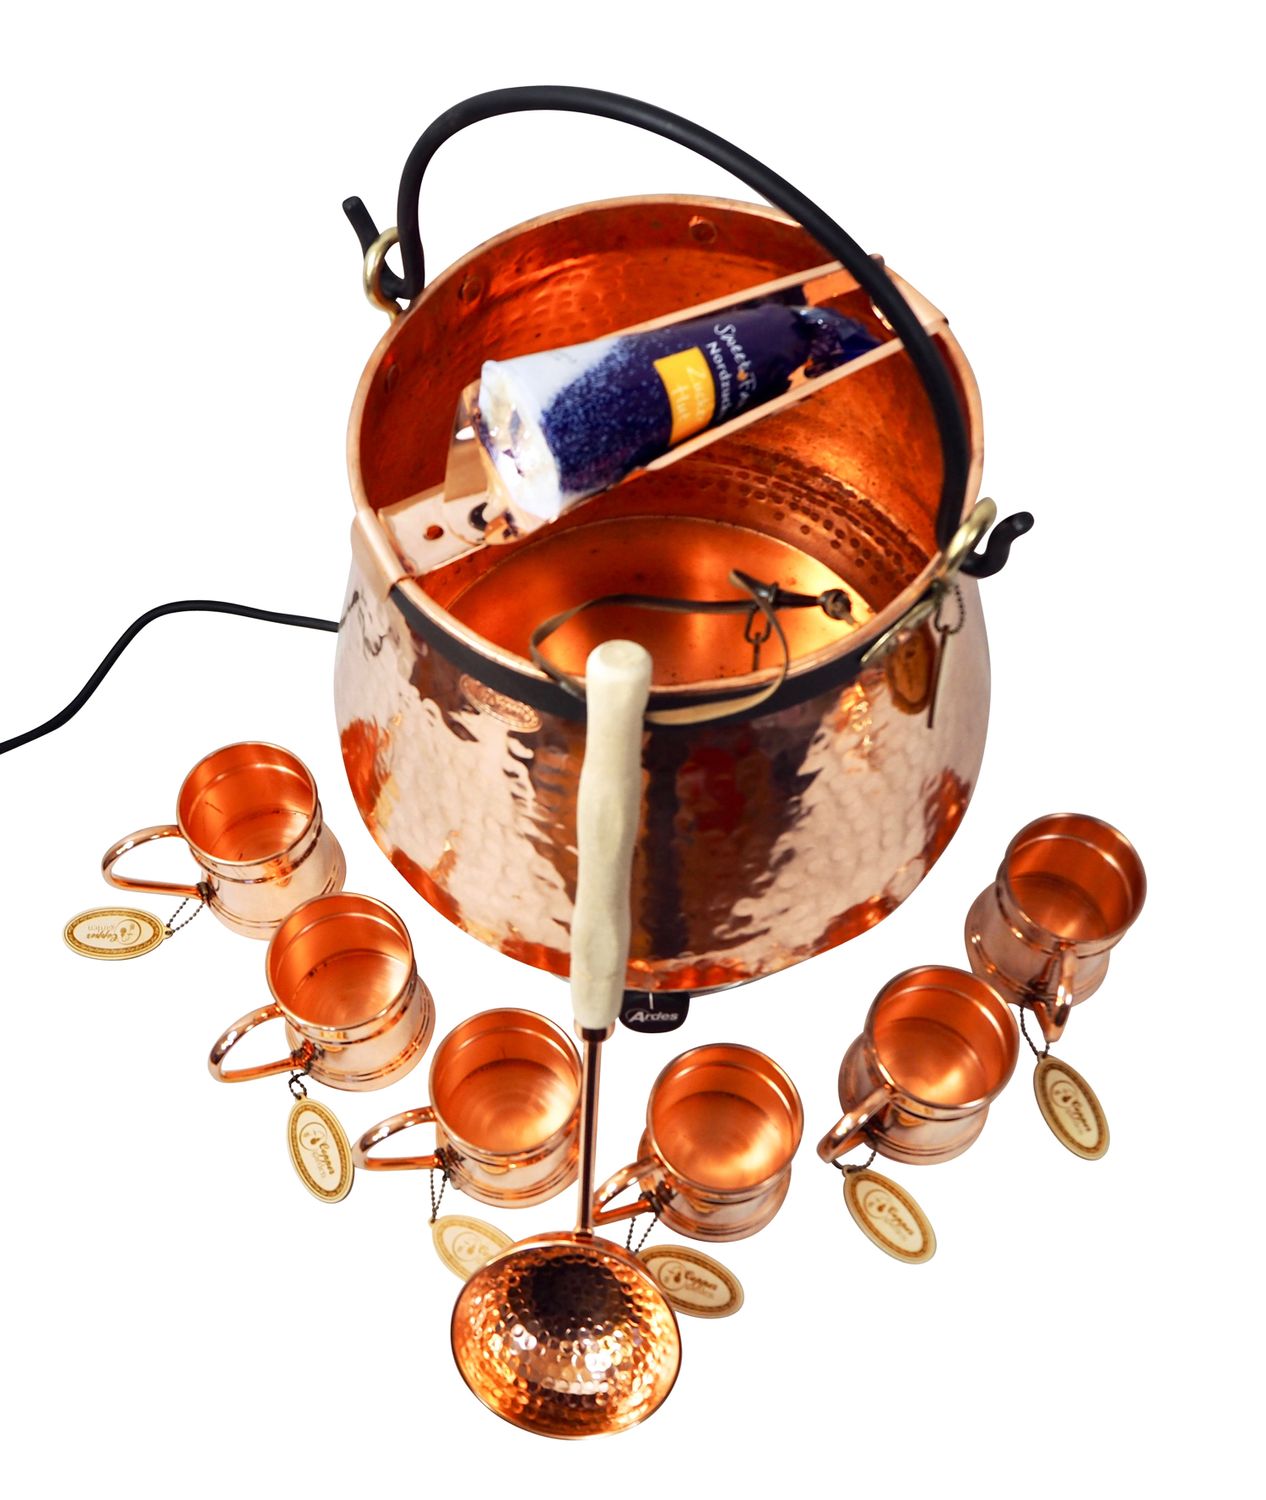 CopperGarden® Feuerzangenbowle 20 Liter Kupferkessel mit